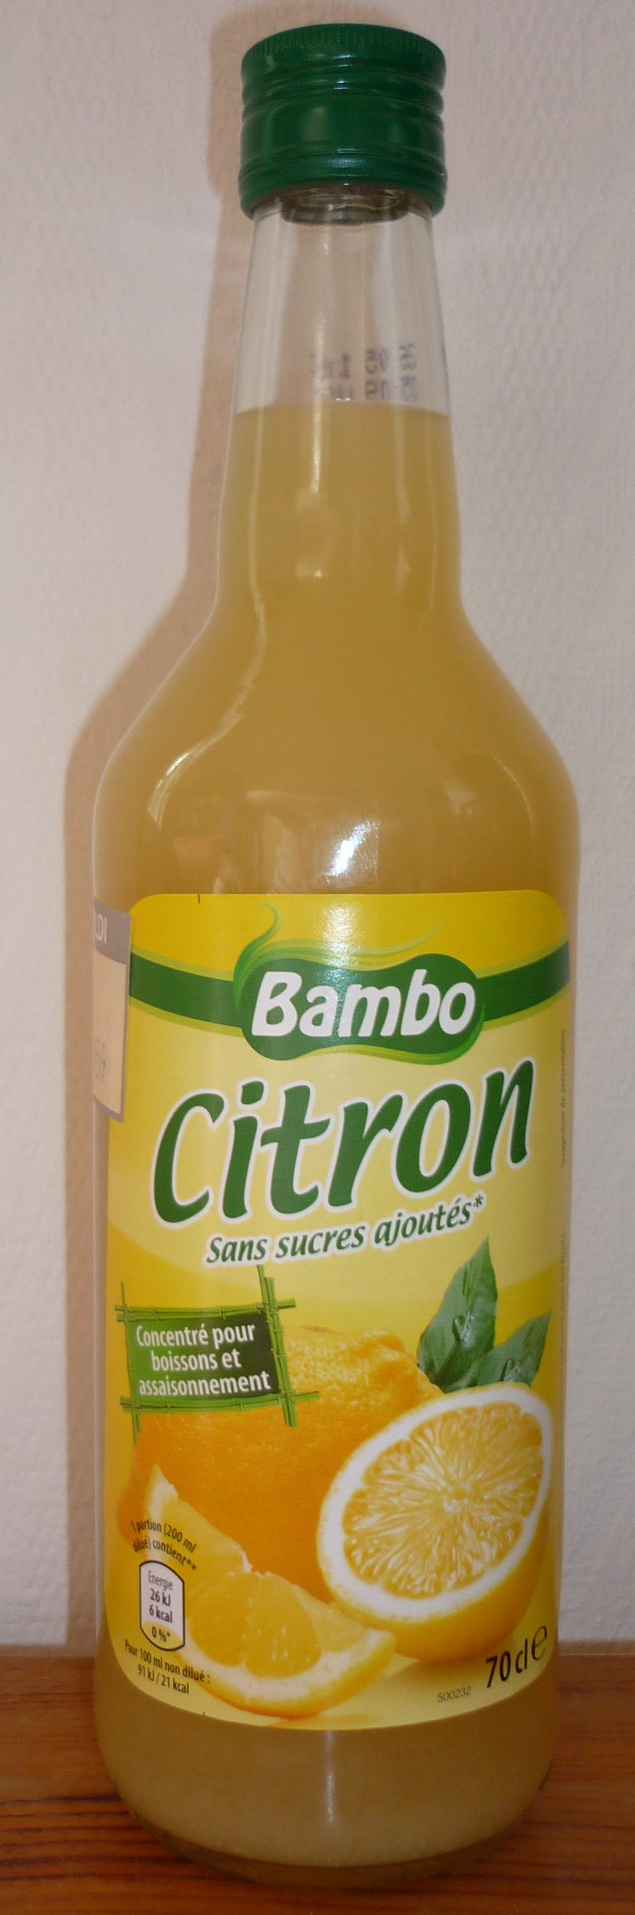 Bambo Citron - Product - fr